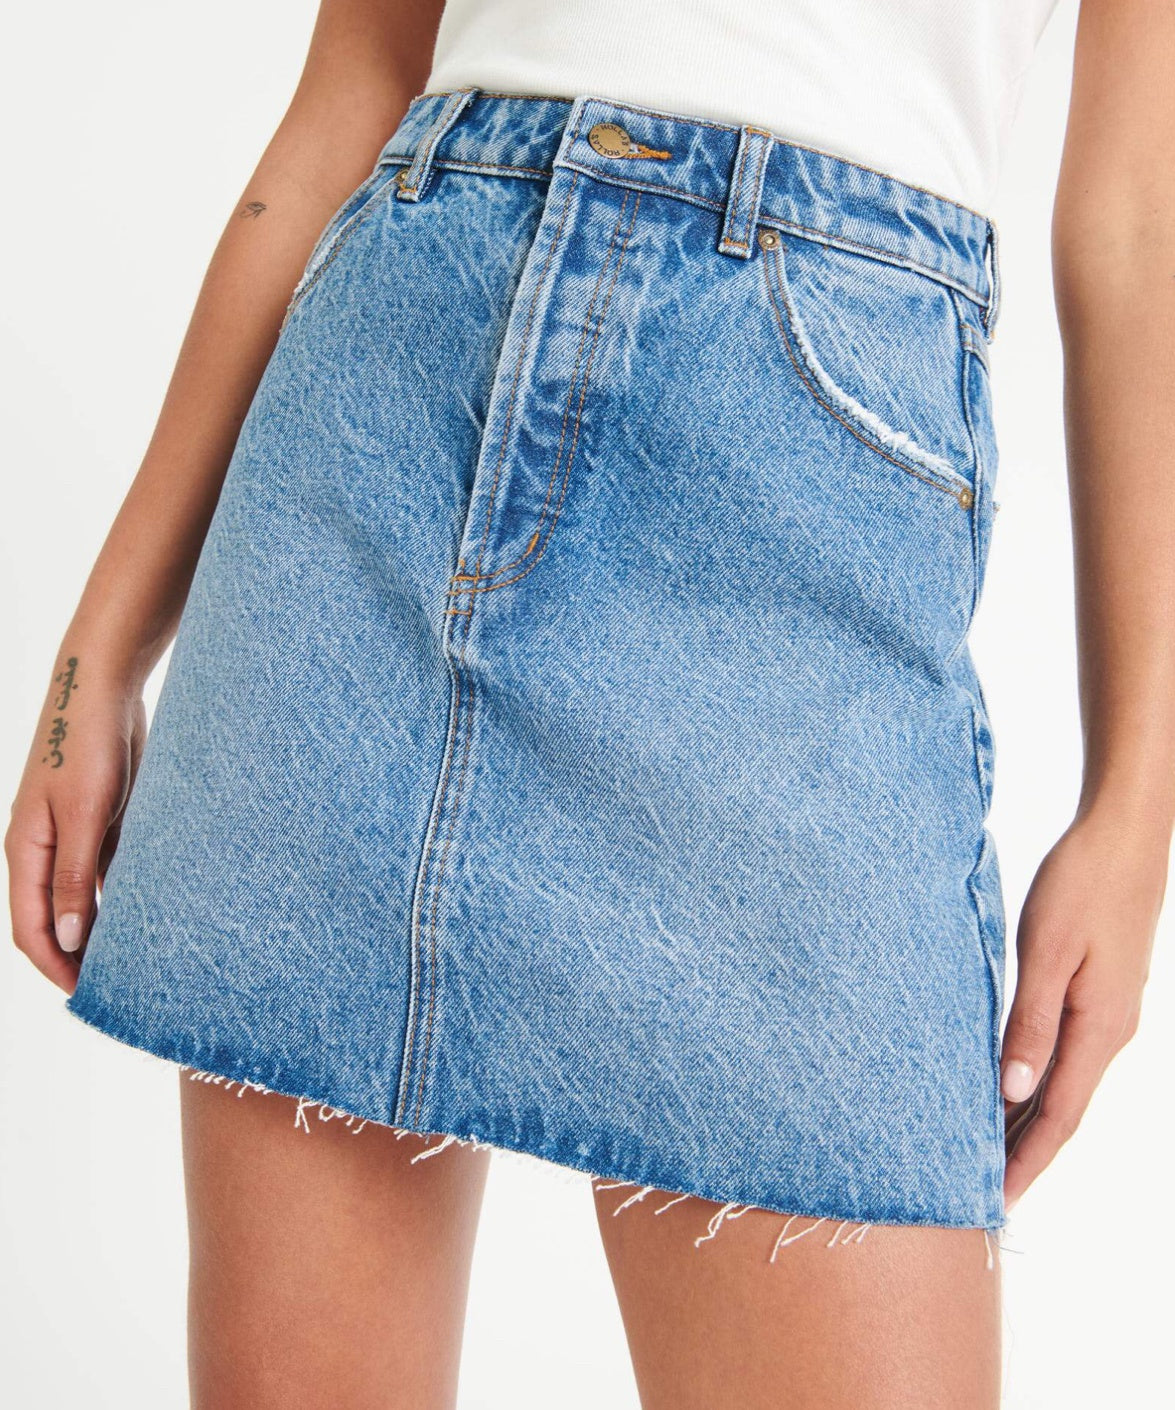 Rolla’s Classic Nina Mini Skirt